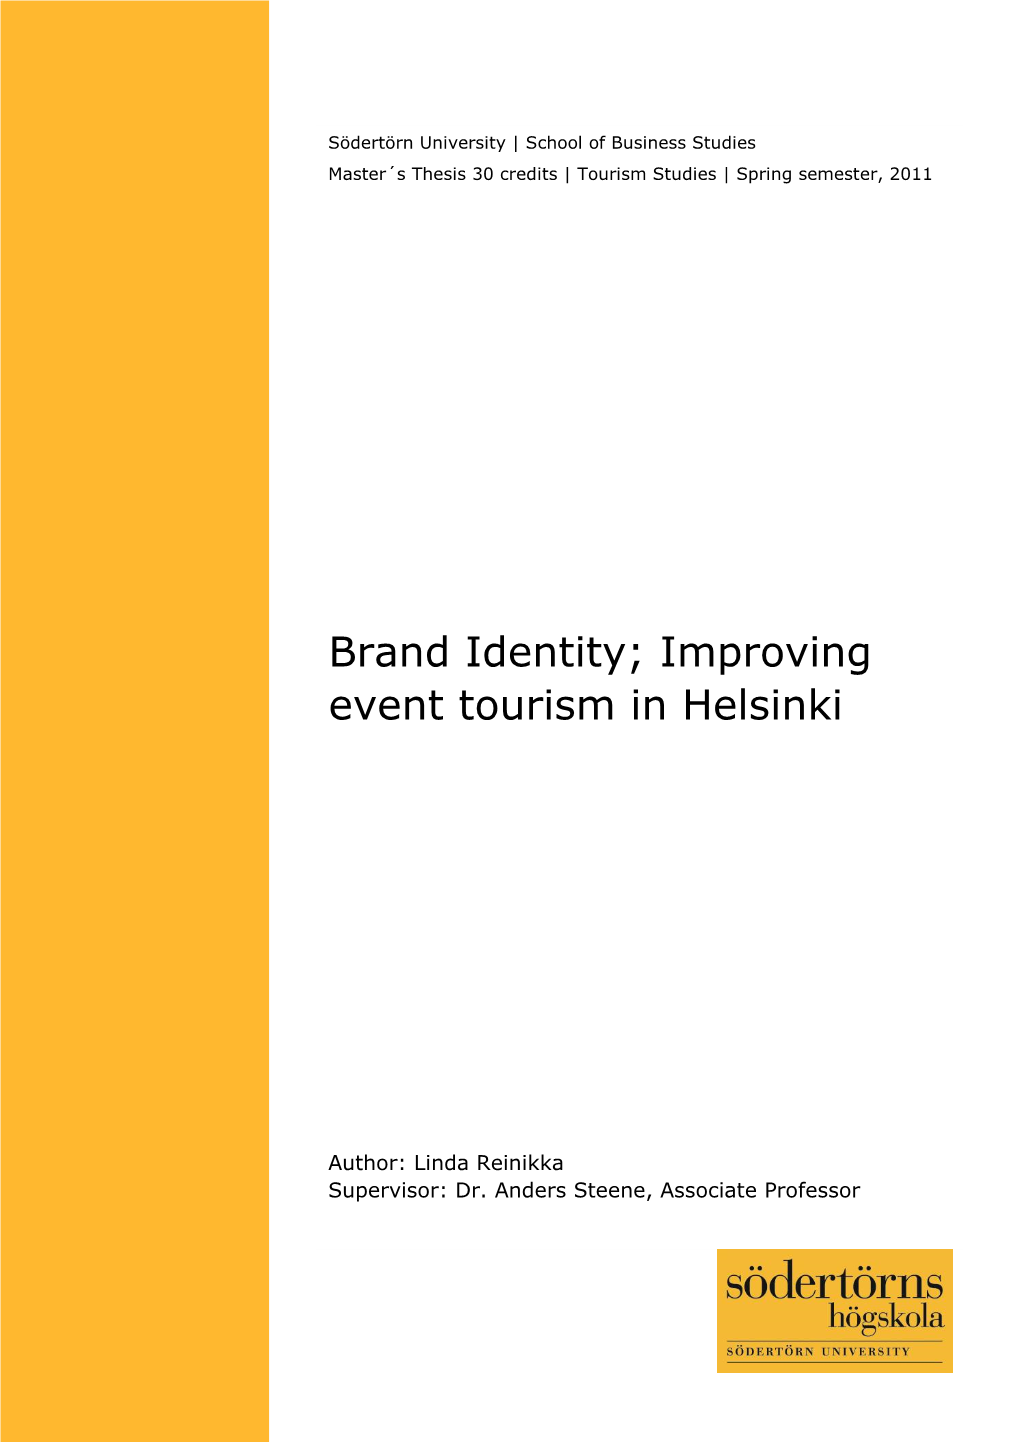 Brand Identity; Improving Event Tourism in Helsinki